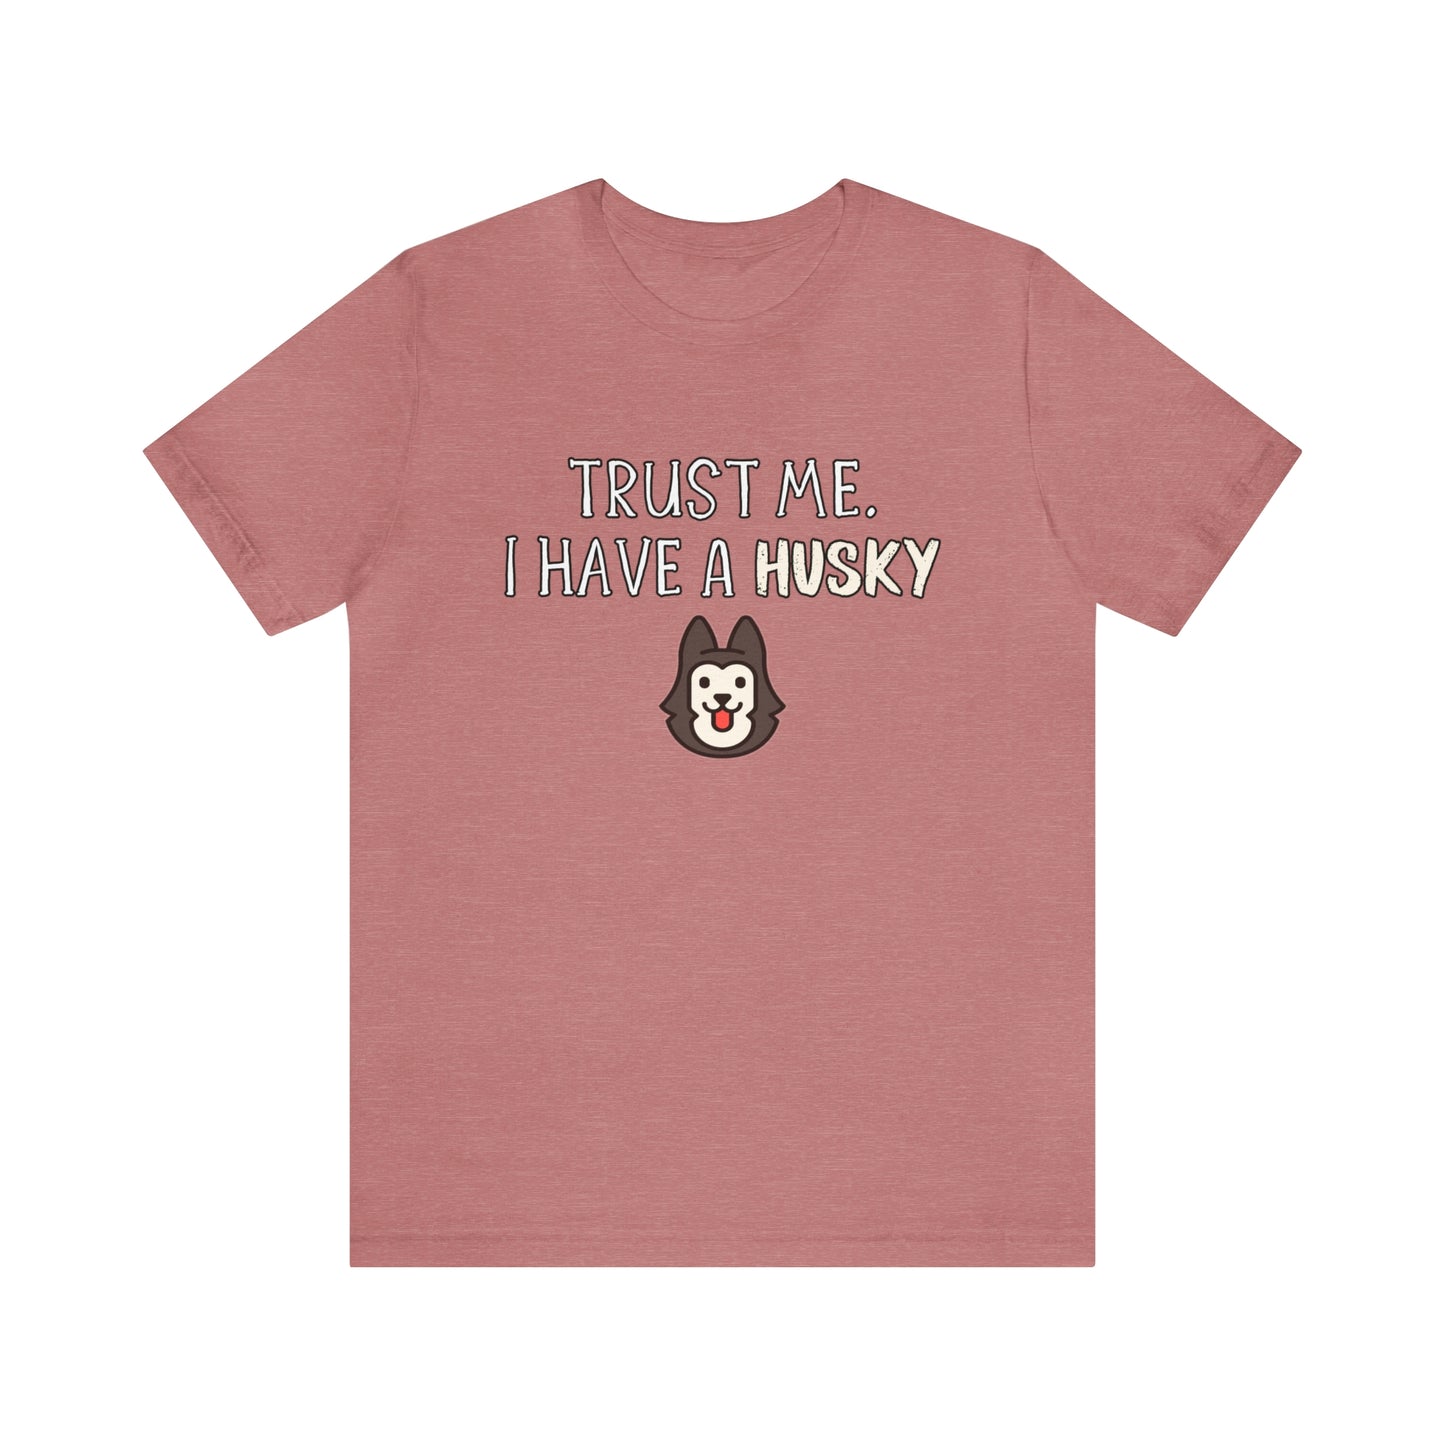 husky t shirt pink